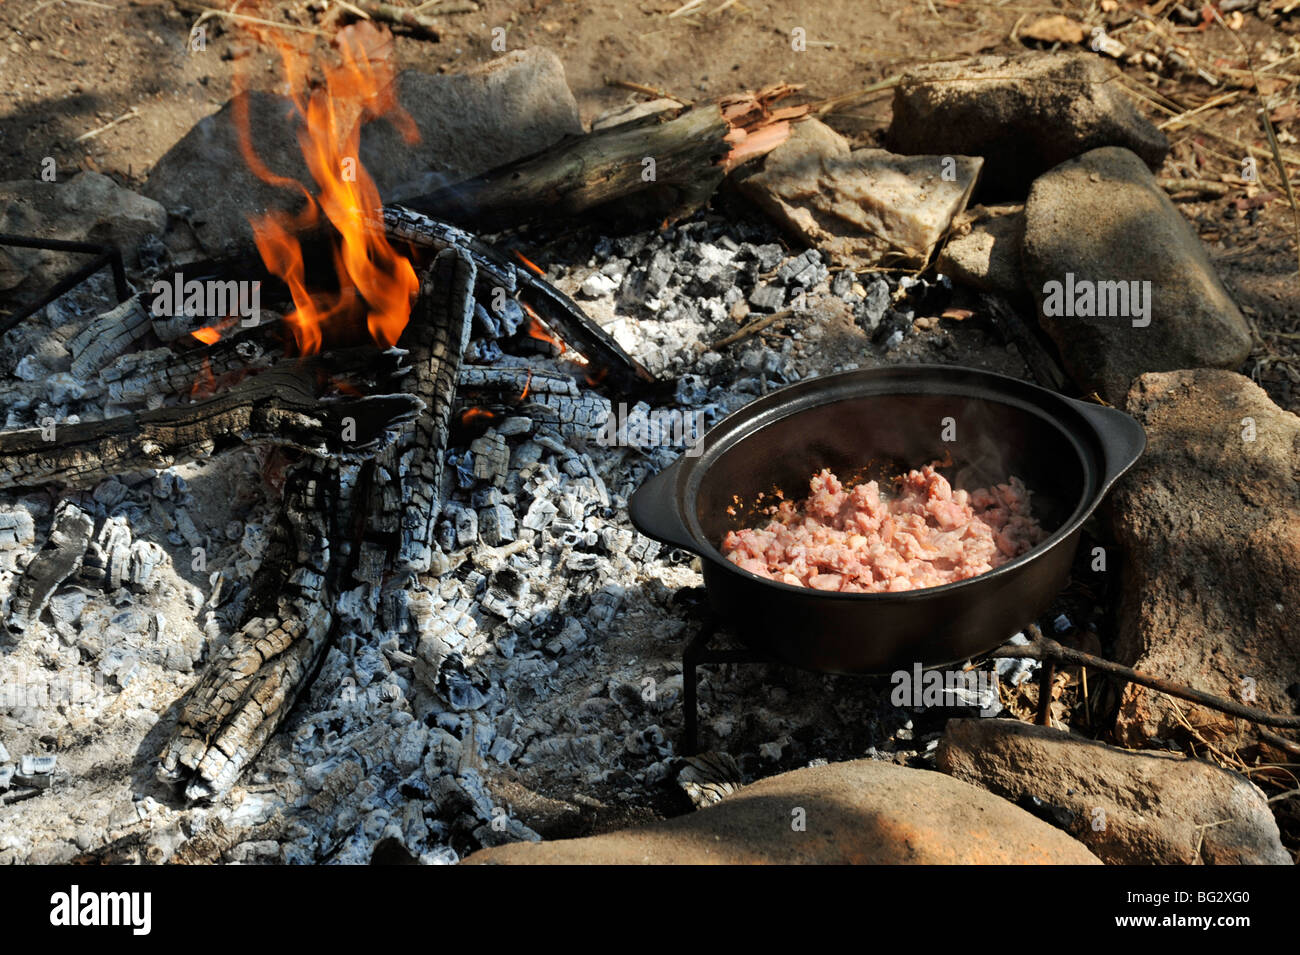 https://c8.alamy.com/comp/BG2XG0/limpopo-south-africa-food-preparation-cooking-bacon-in-black-pot-over-BG2XG0.jpg